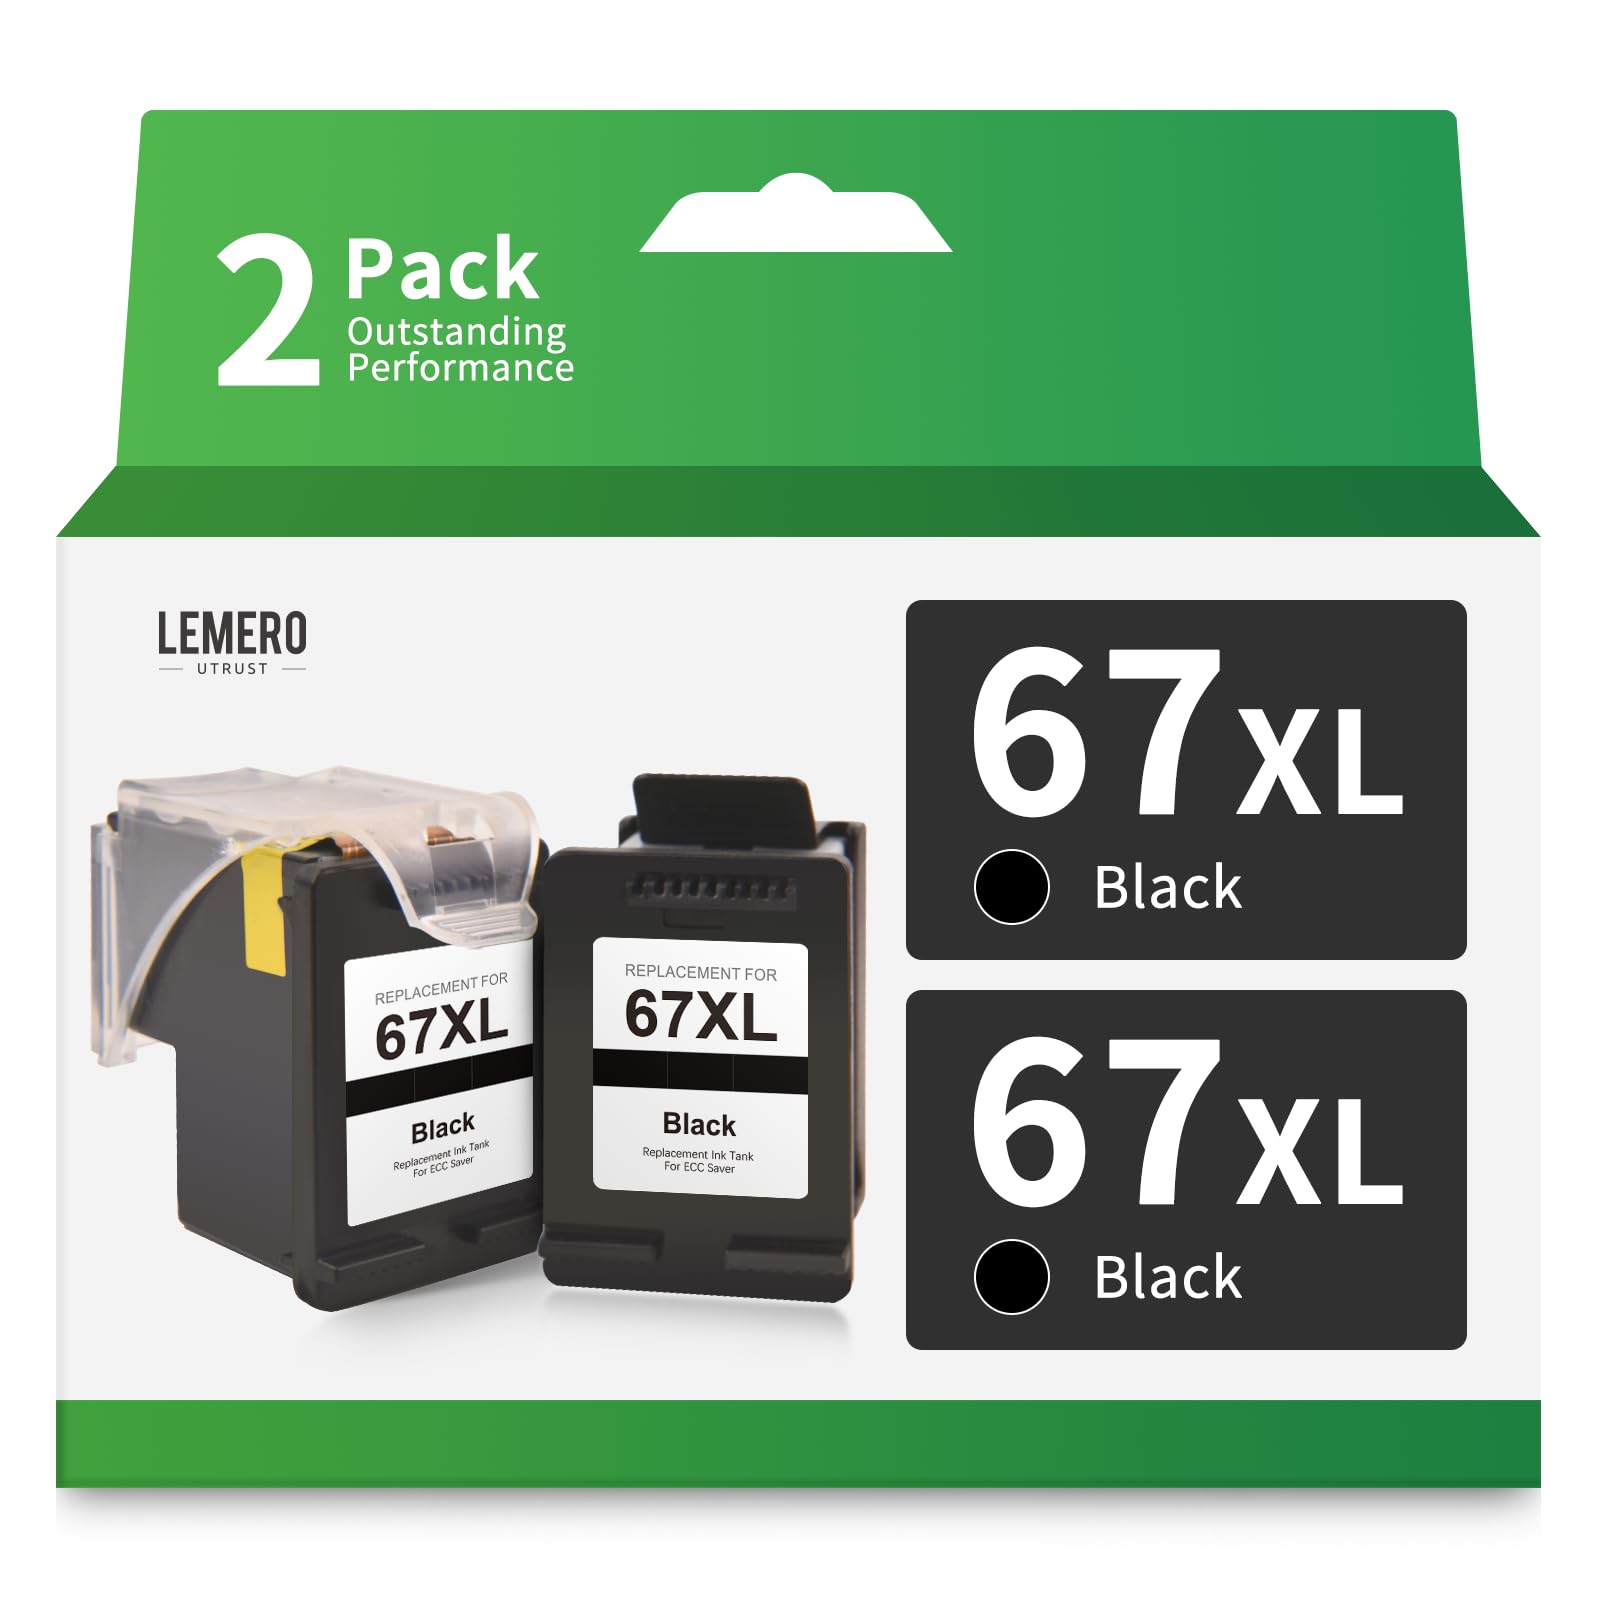 HP 67XL ink cartridge combo pack in Lemero Utrust packaging